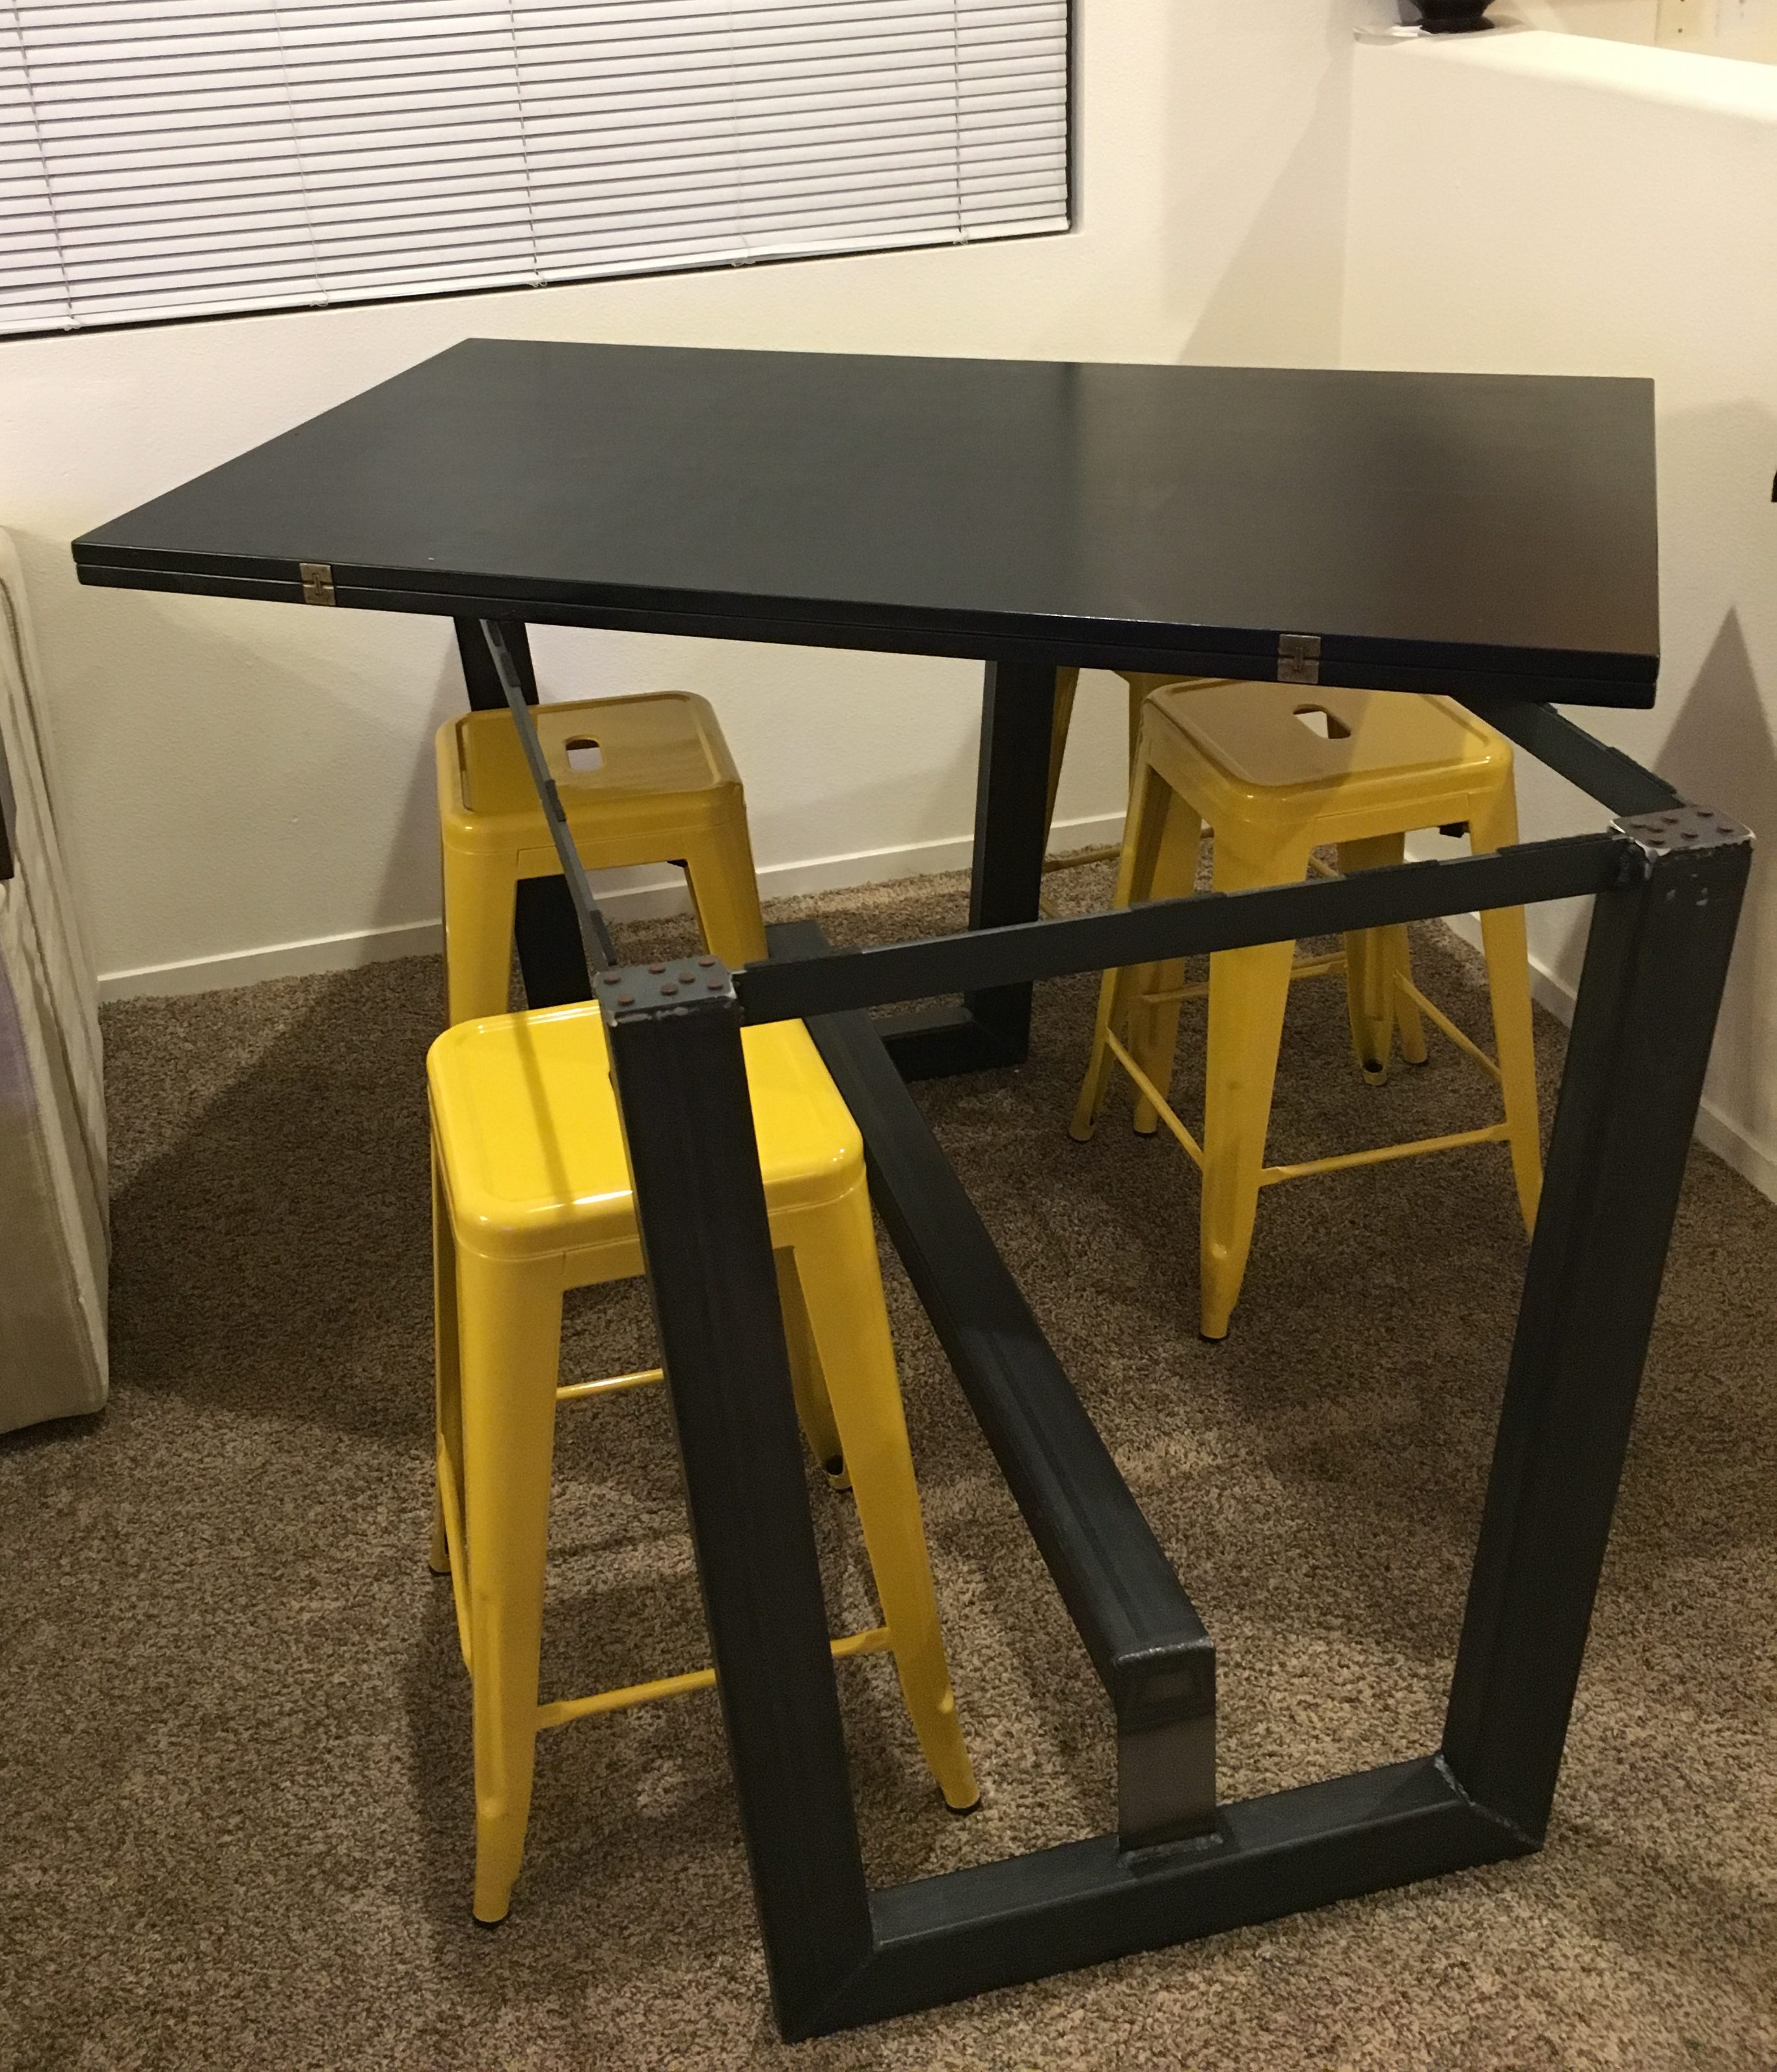 Rotating the folded table top on custom metal base.